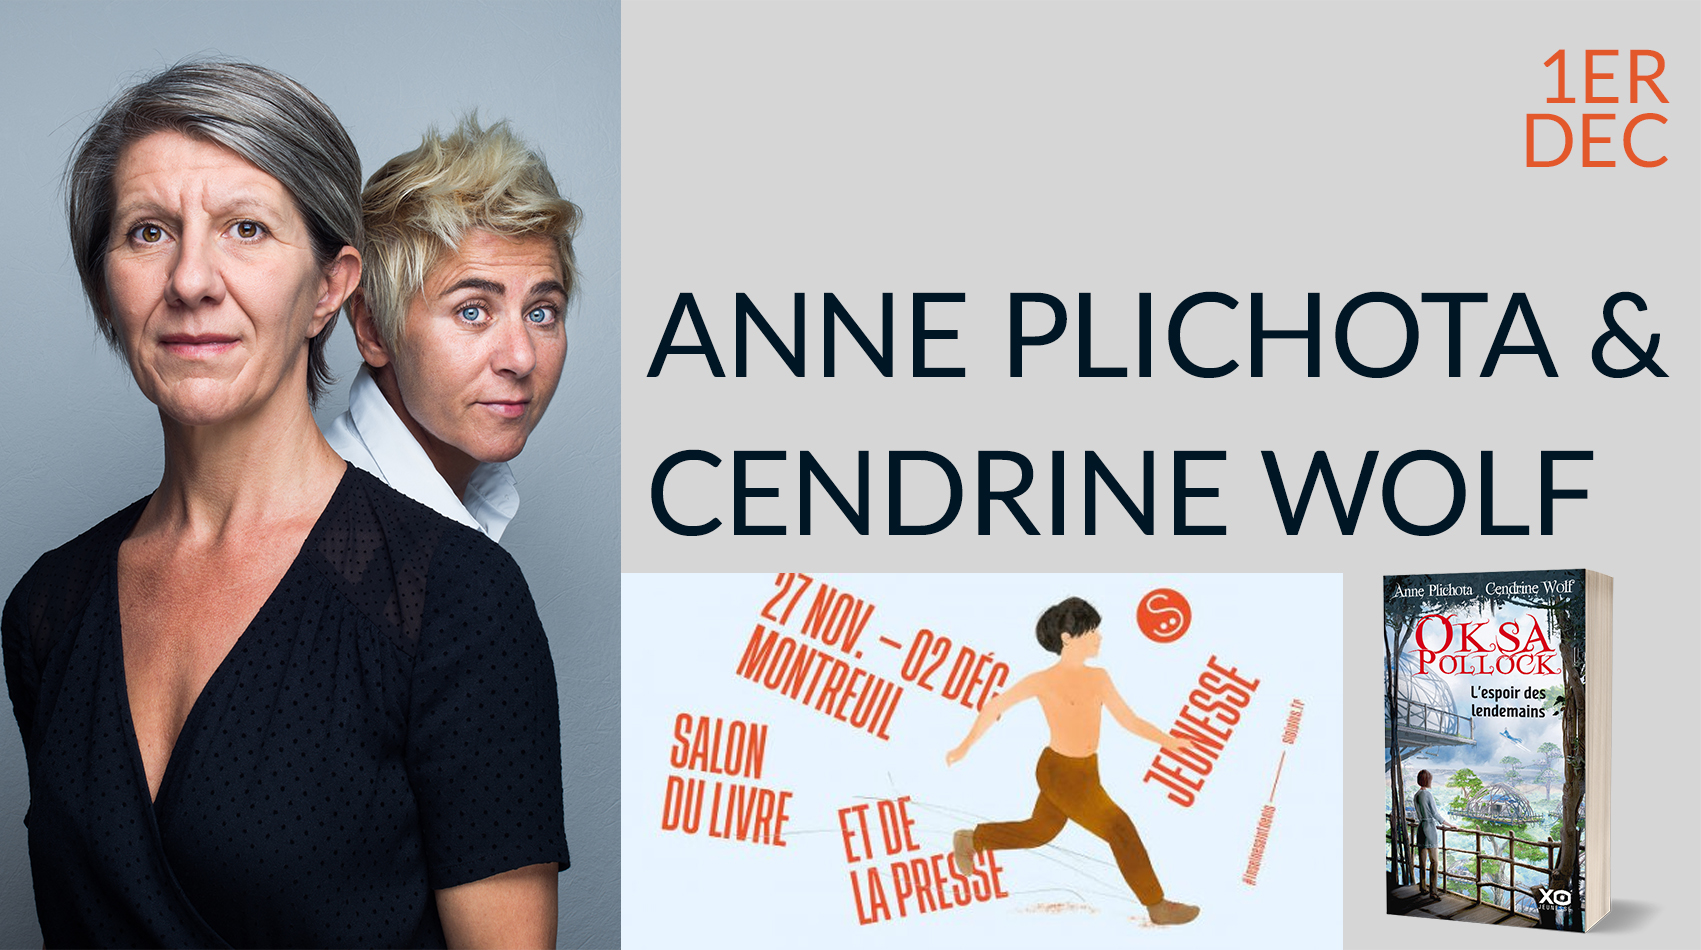 ANNE PLICHOTA & CENDRINE WOLF AU SLPJ 2019 !